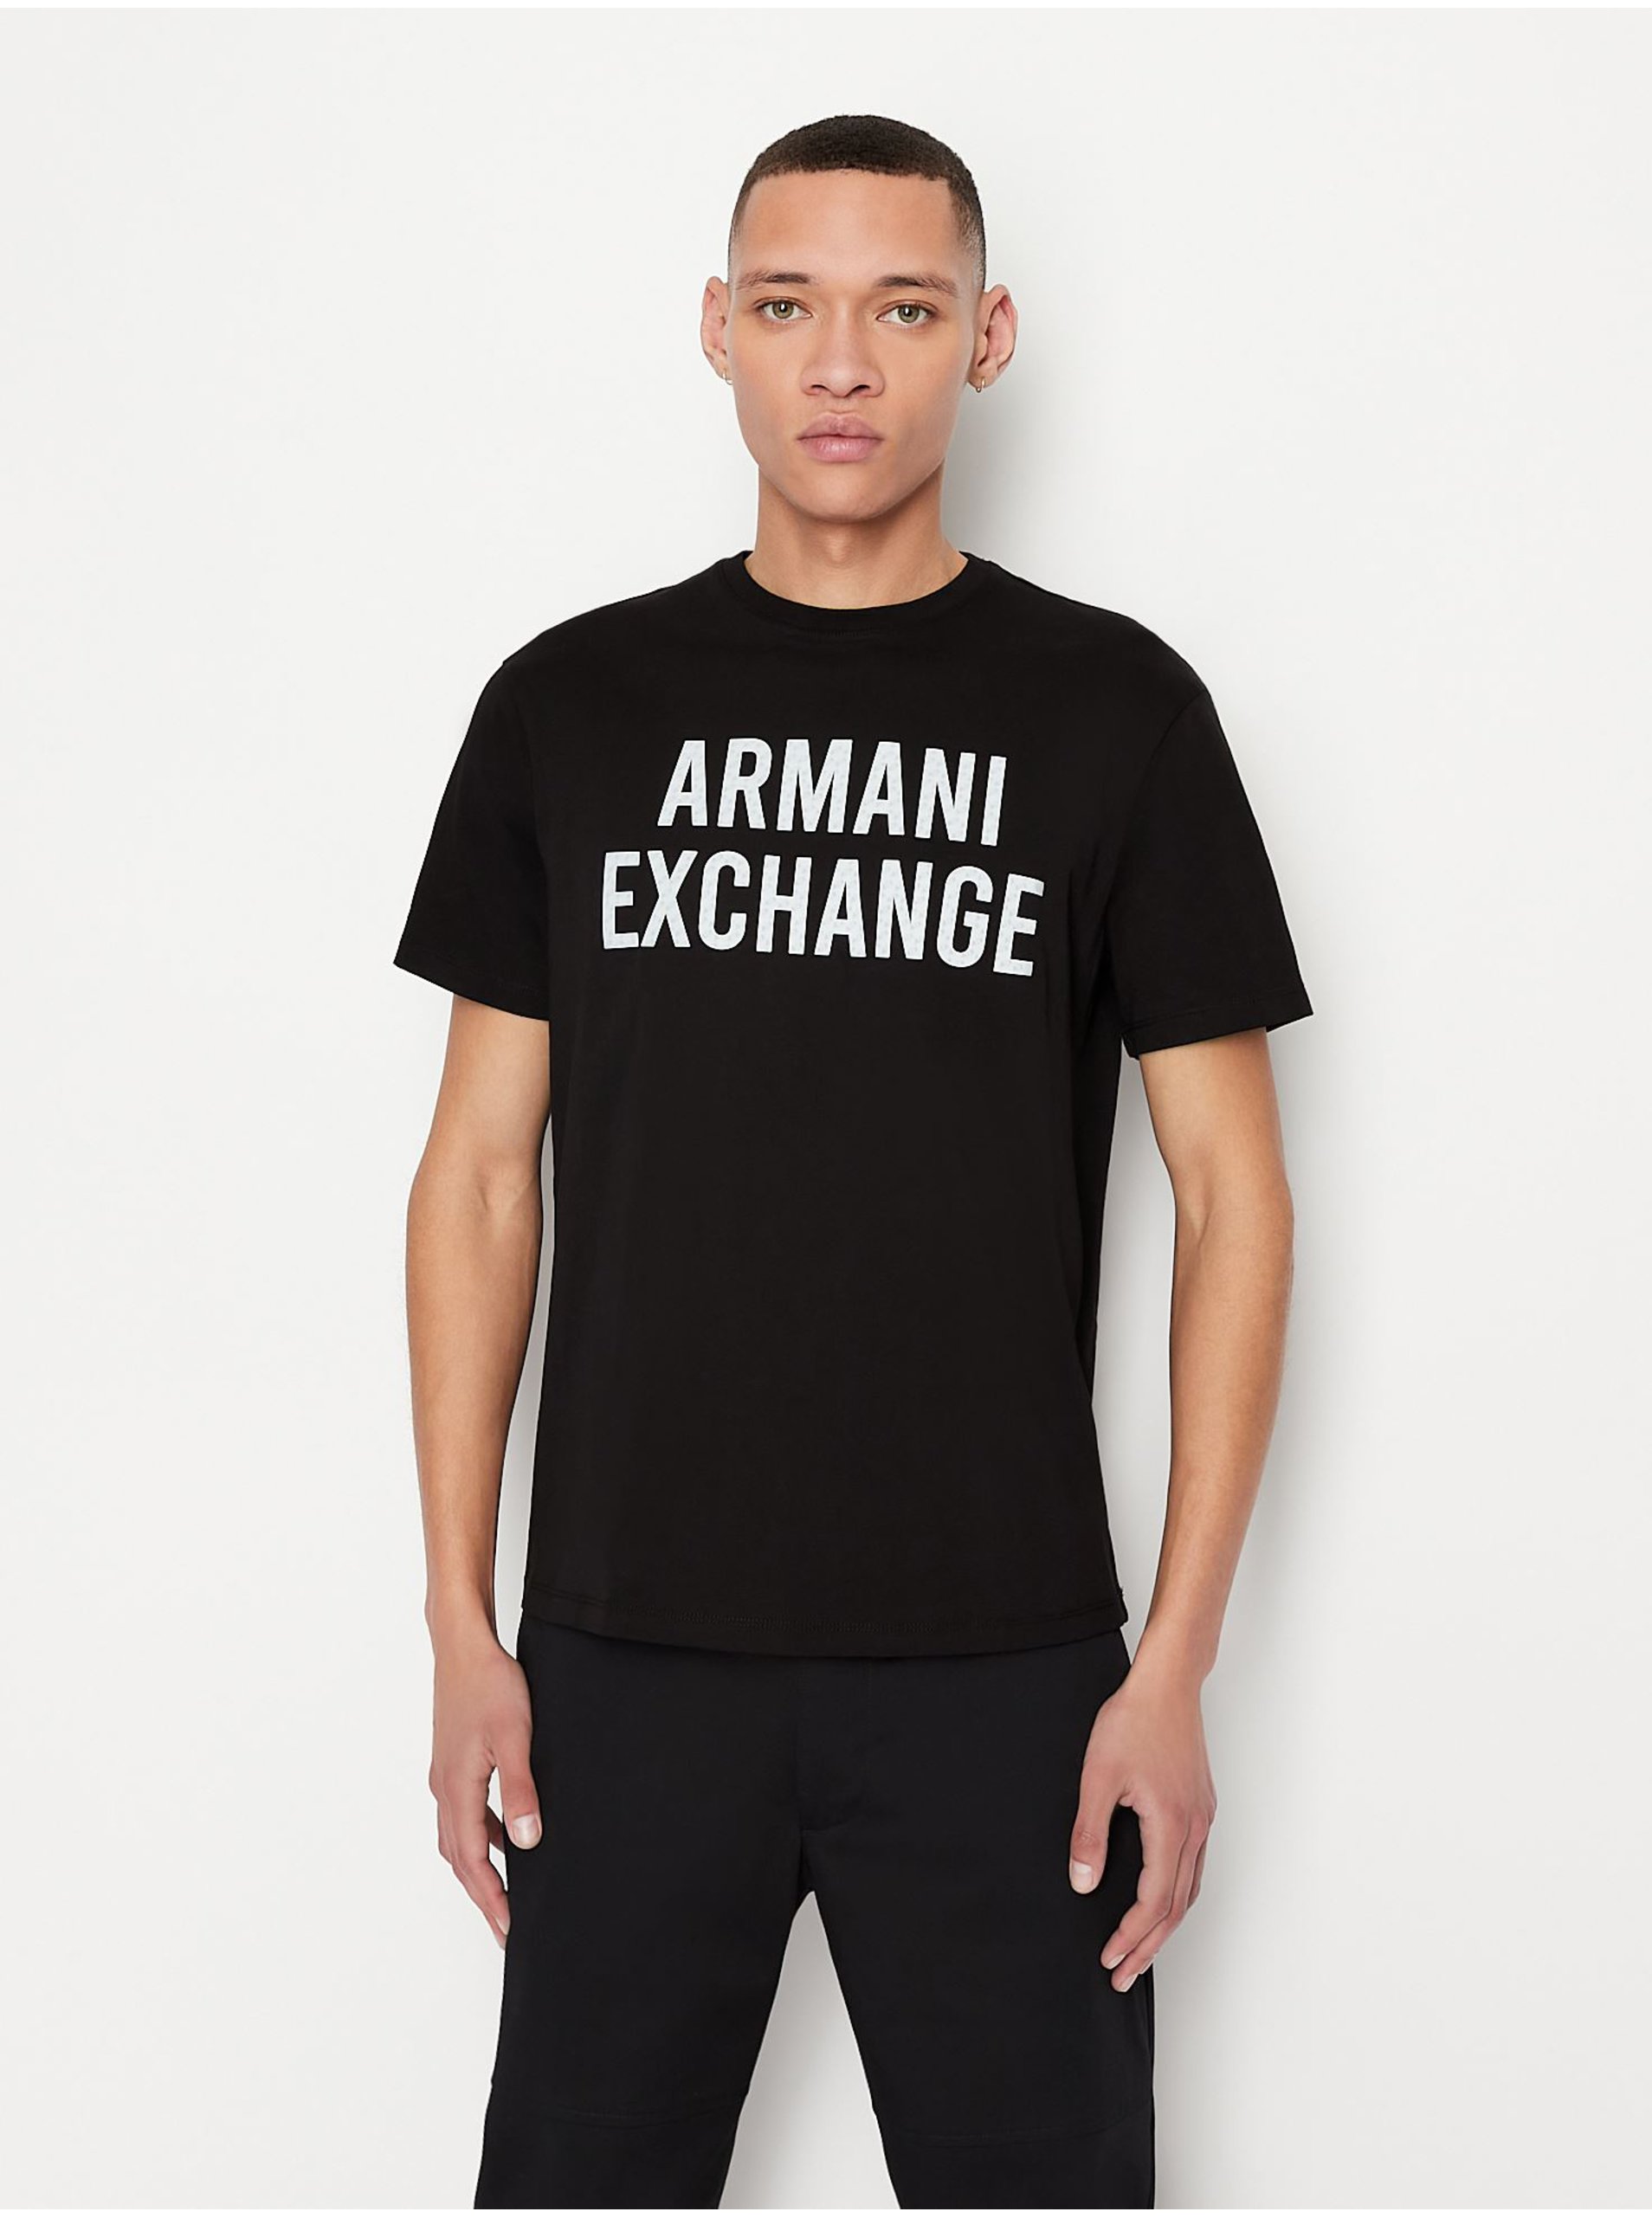 Pánske tričko Armani Exchange